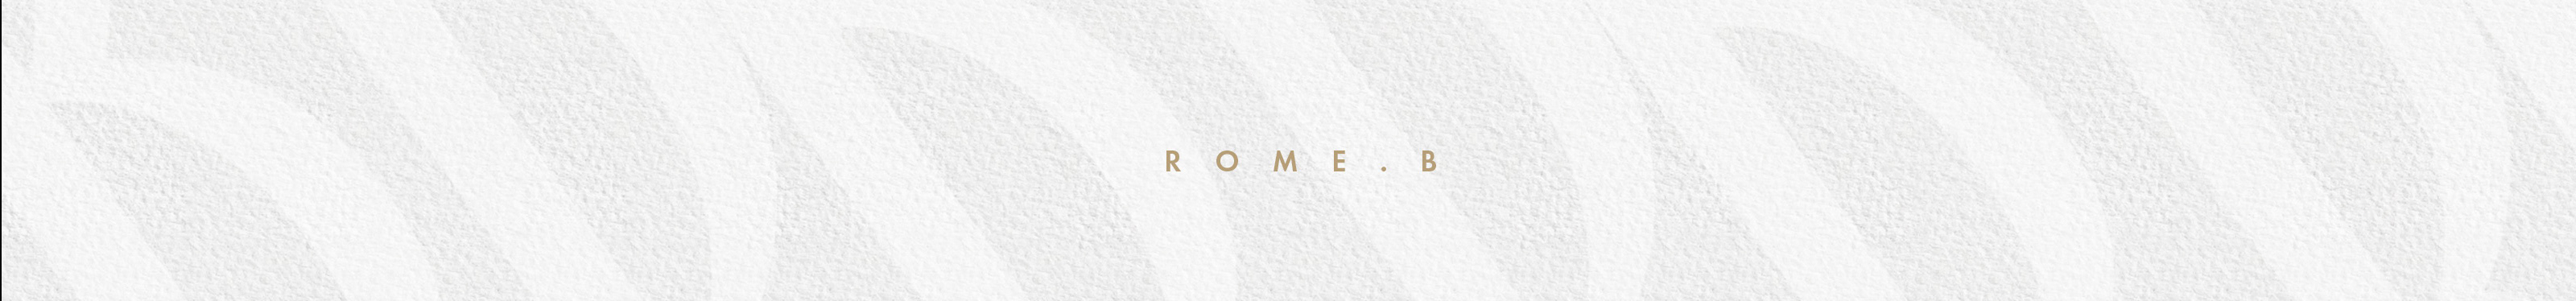 Rome B Creation's profile banner